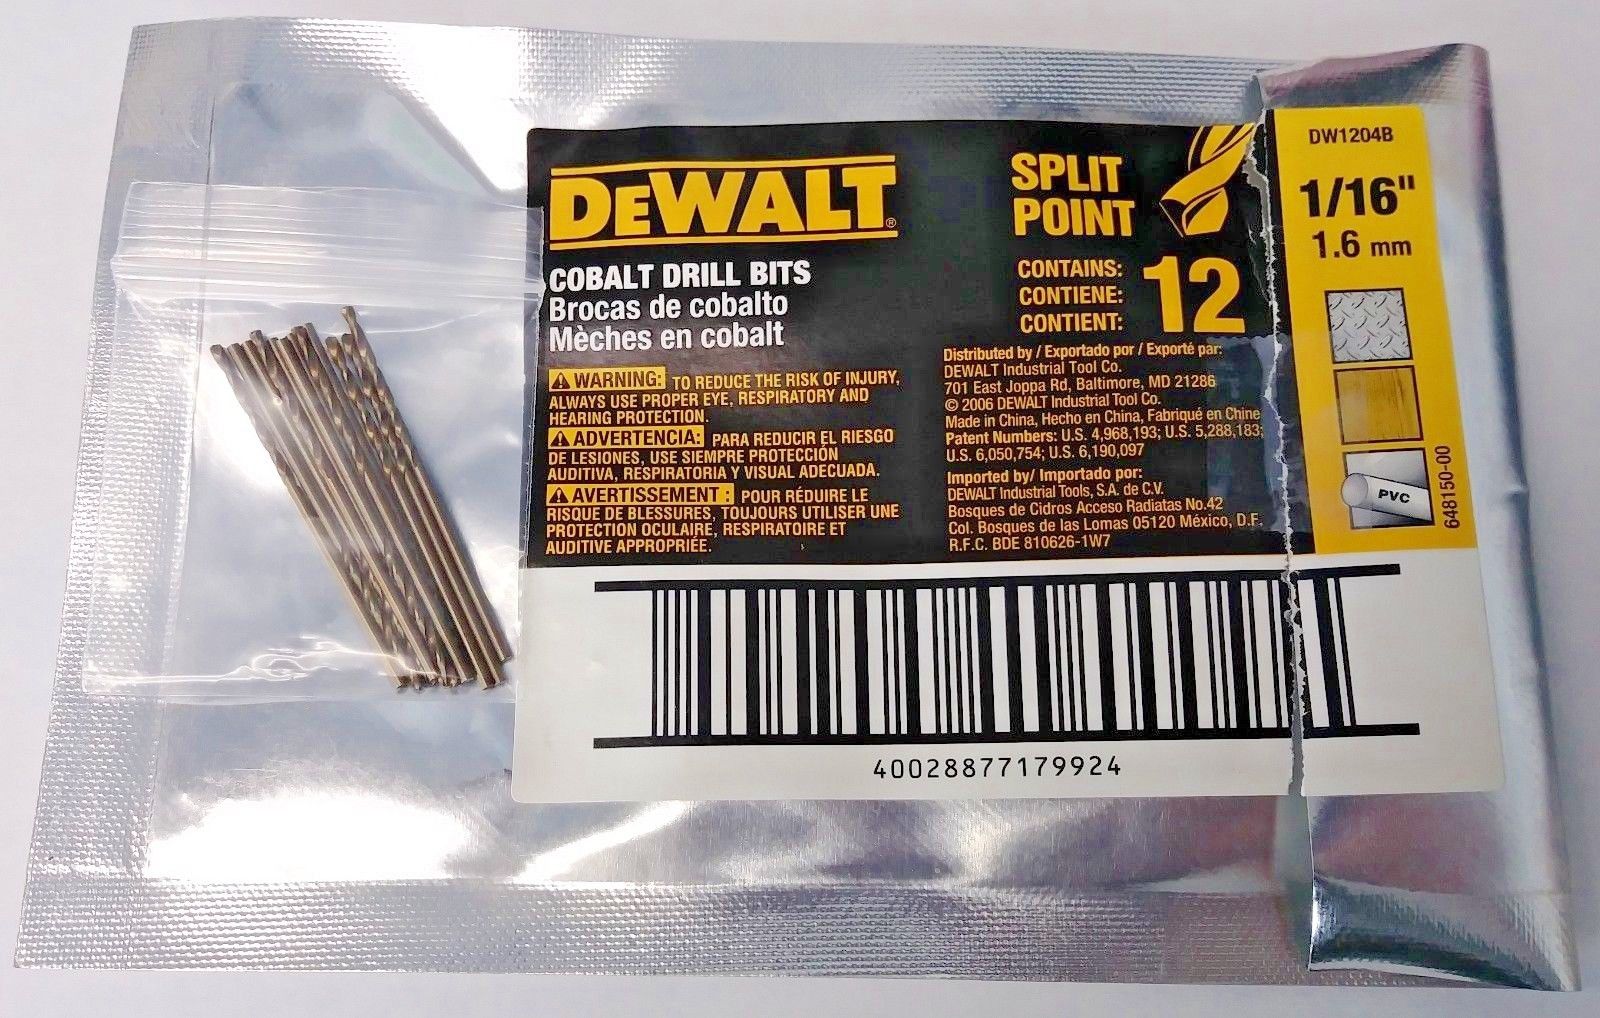 Dewalt DW1204B 1/16" Split Point Cobalt Drill Bits 12 Pack (Bulk)